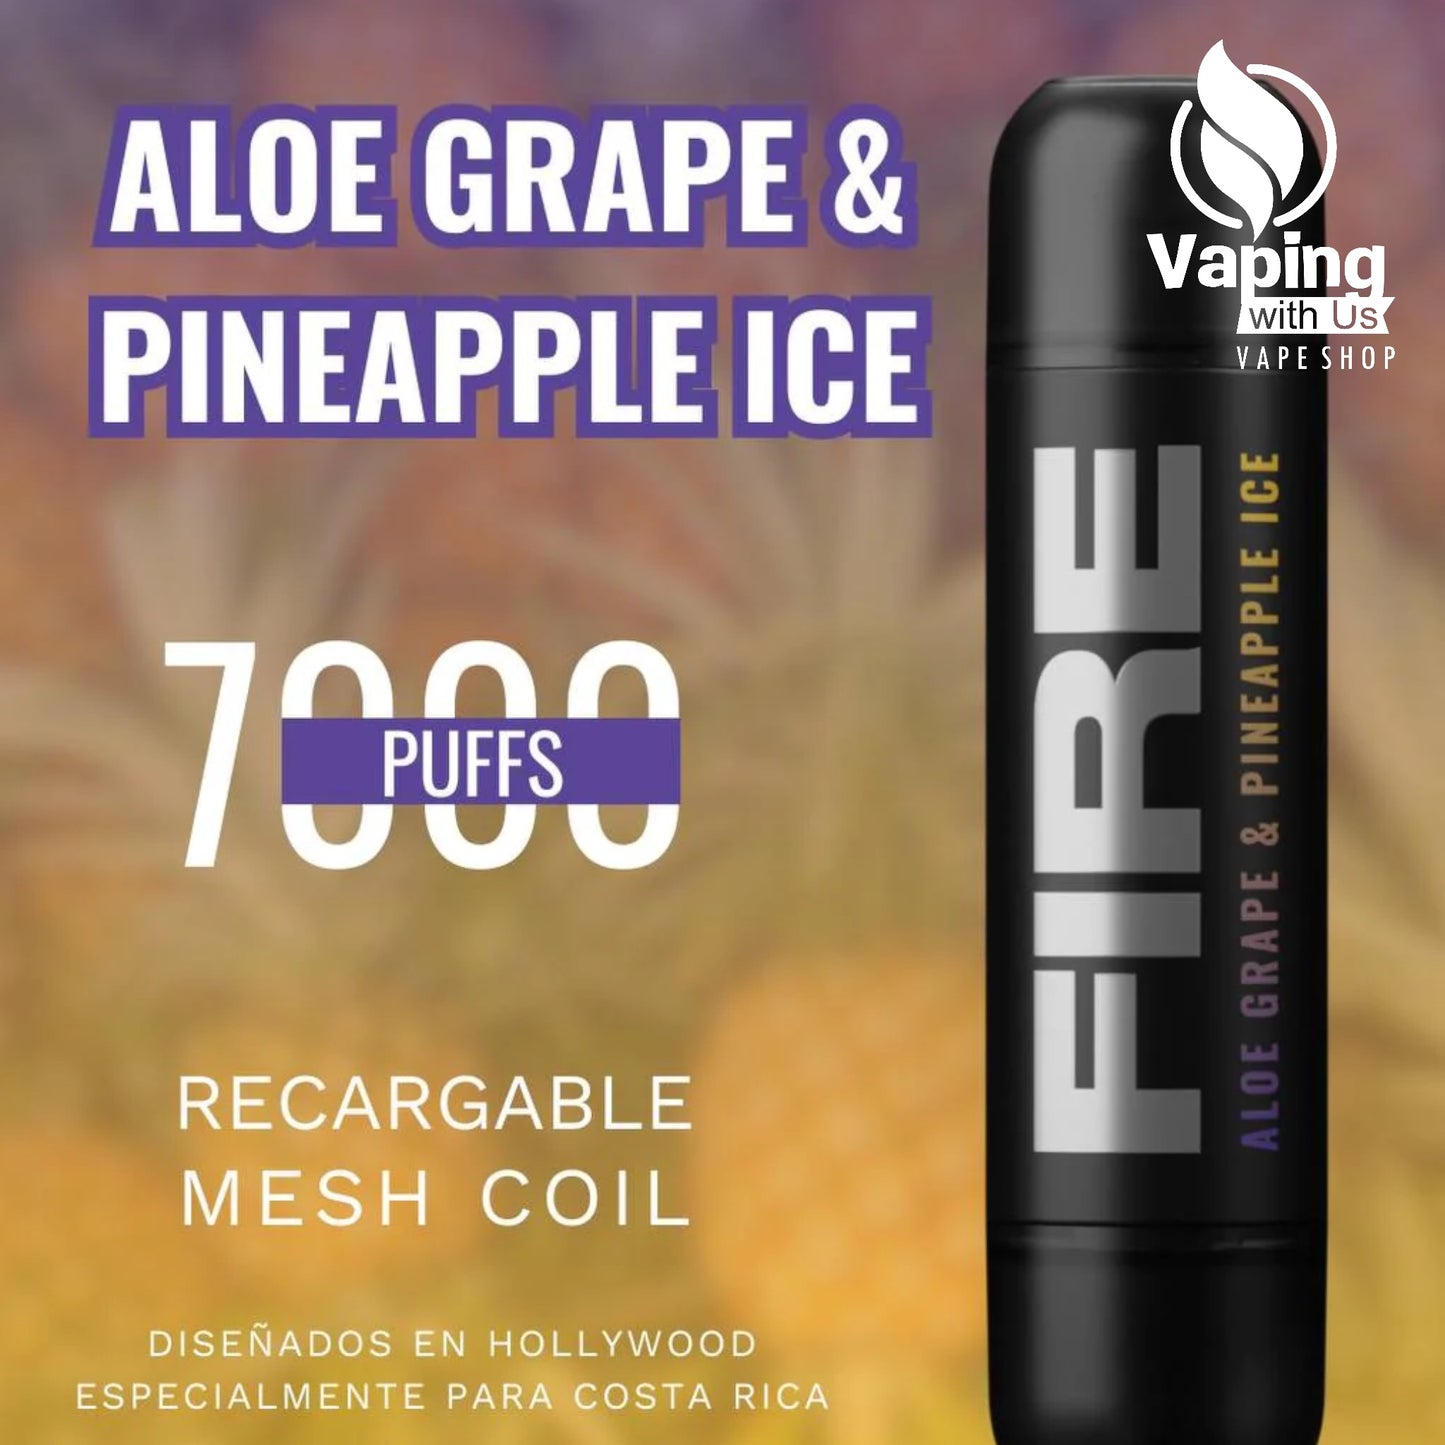 Aloe Graple & Pineapple Ice - FIRE 7000 Puffs 5%/50mg